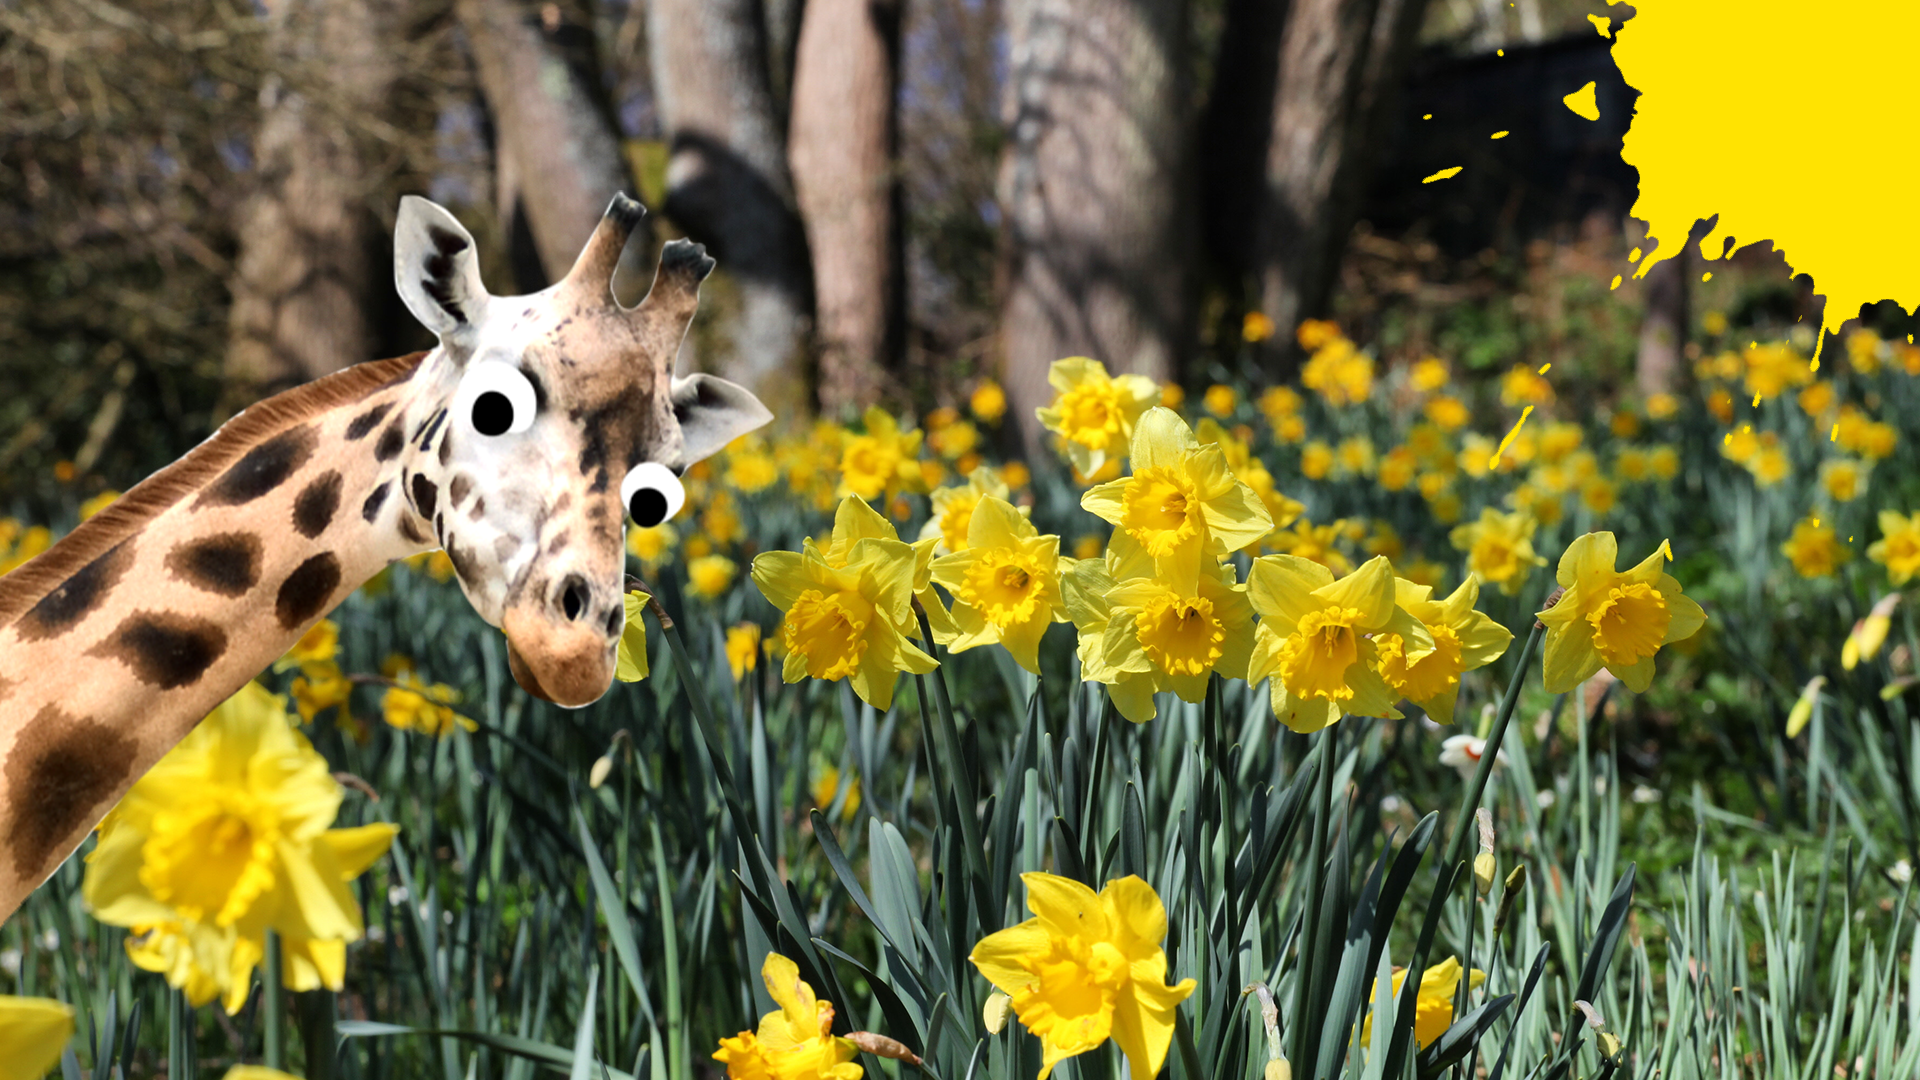 Daffodils and Beano giraffe